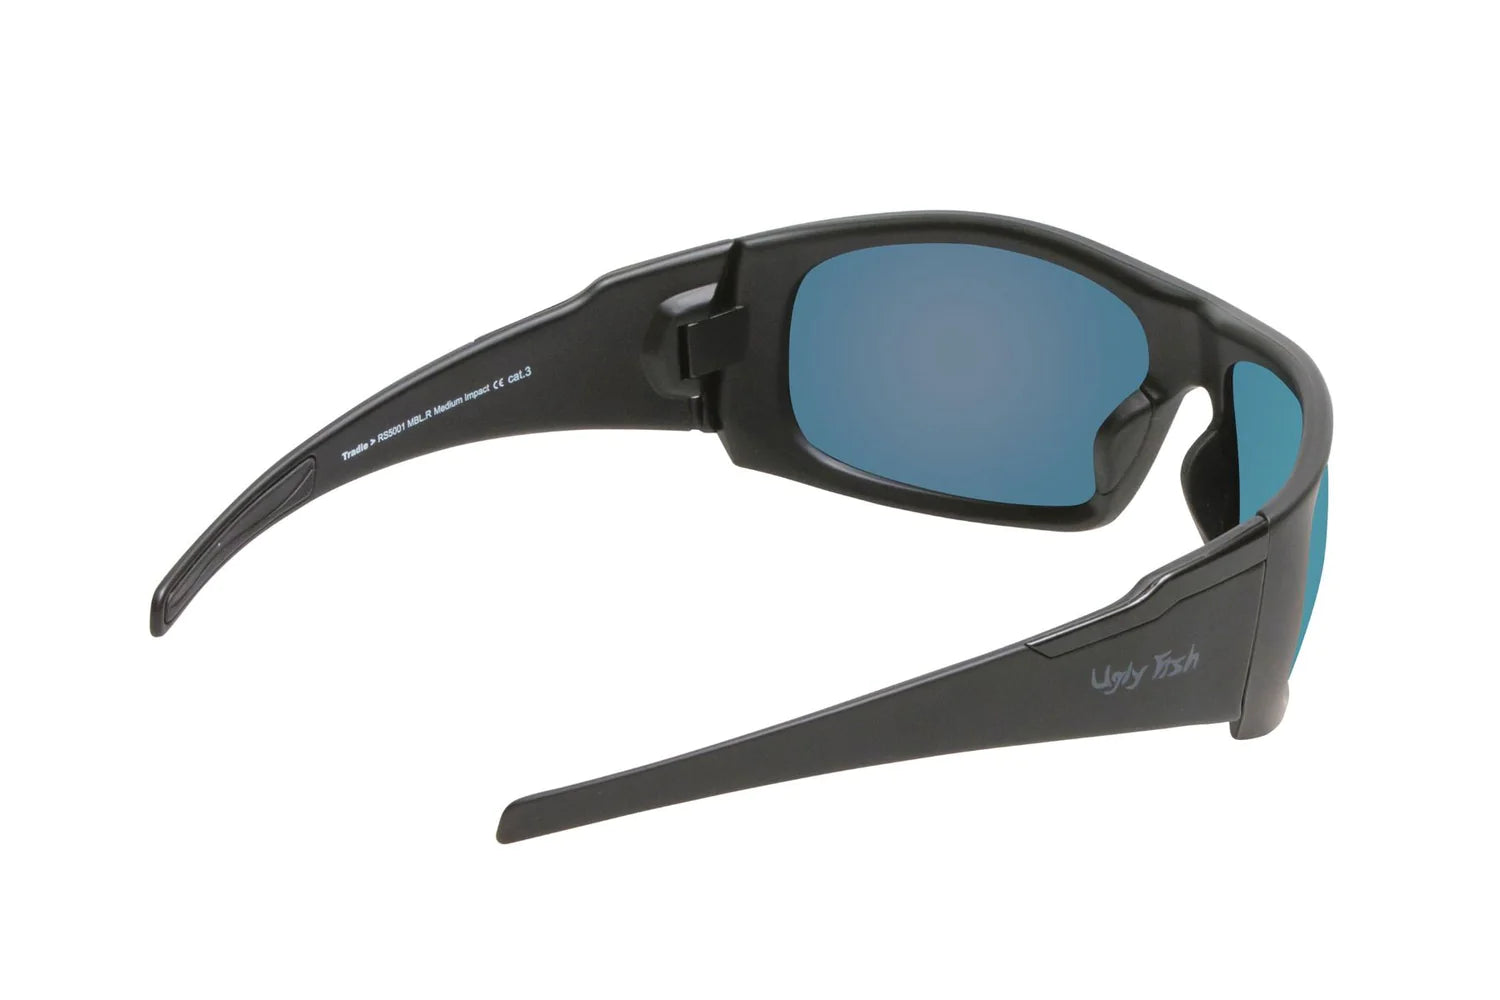 Ugly Fish RS5001 MBL.B Tradie Safety Sunglasses-Matt Black Frame/Blue